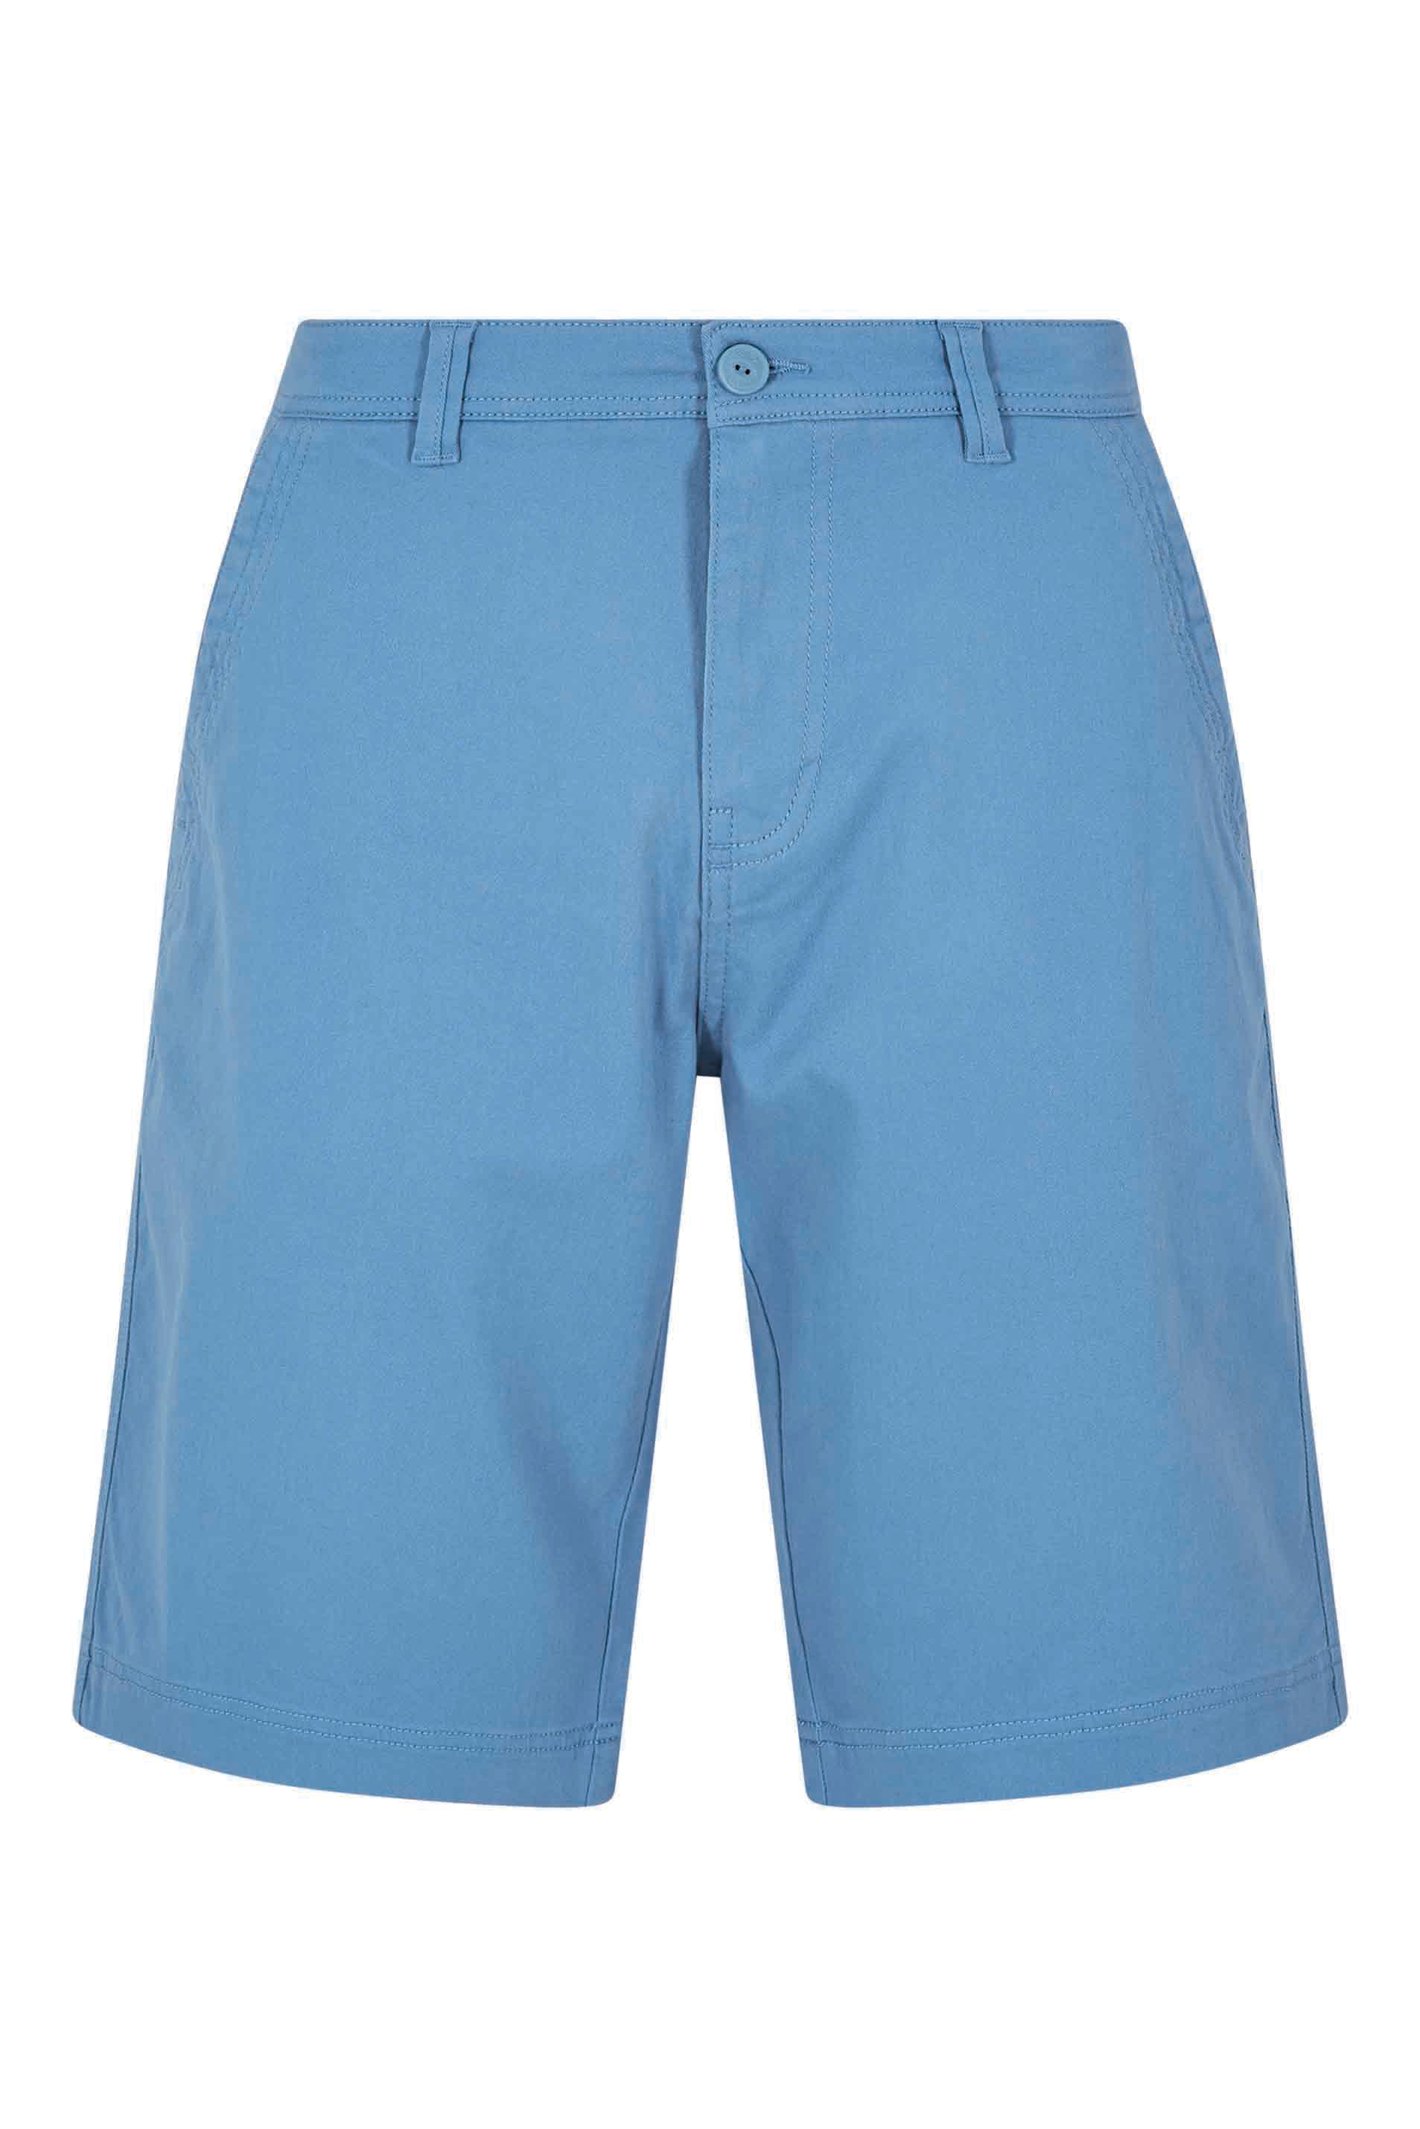 Weird Fish Rayburn Flat Front Shorts Blue Sapphire Size 40